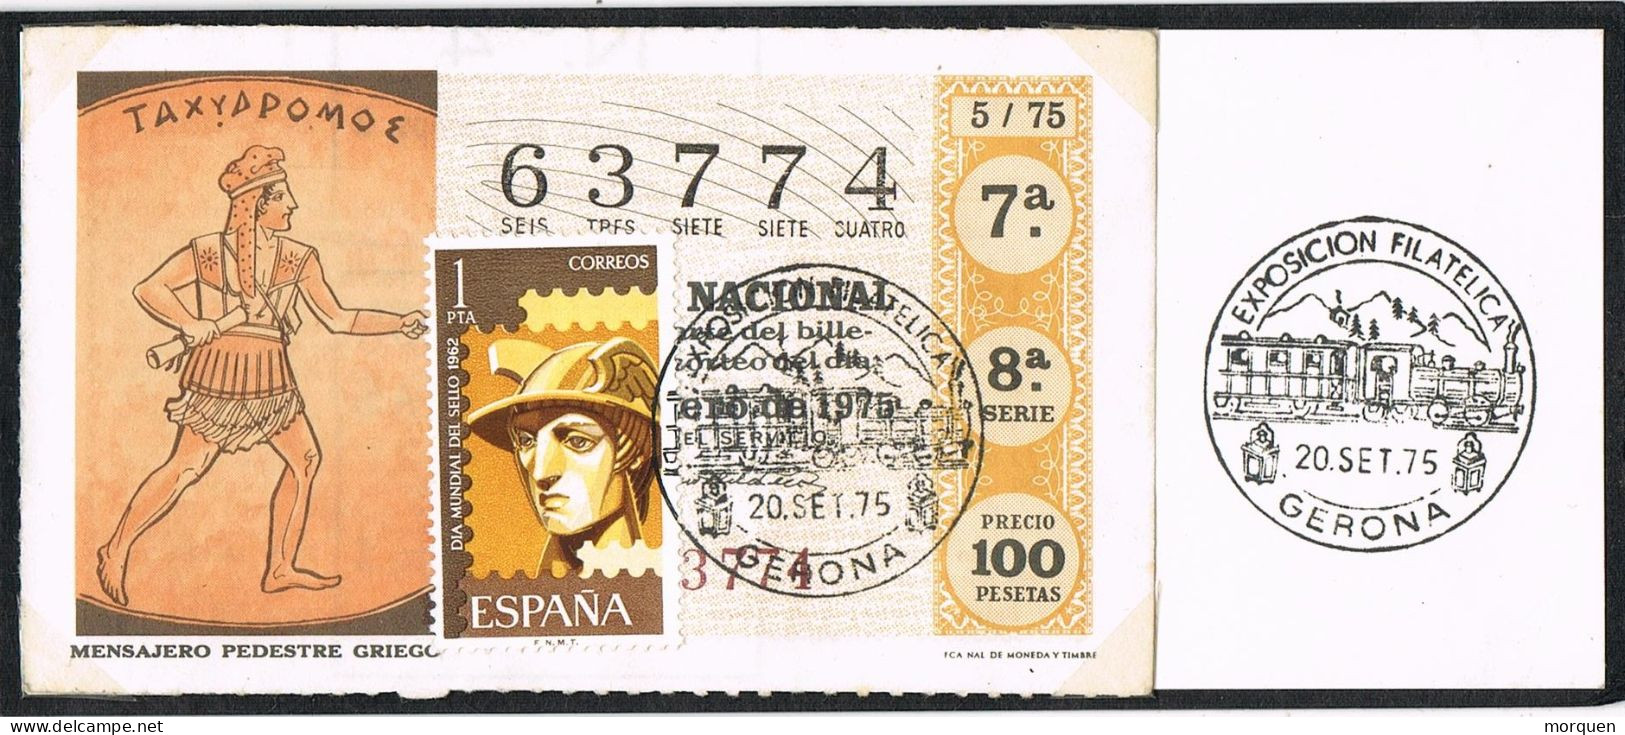 54578. Billete Loteria GERONA 1975. Ferrocarril, Matasellos Exposicion Filatelica. Tren - Covers & Documents